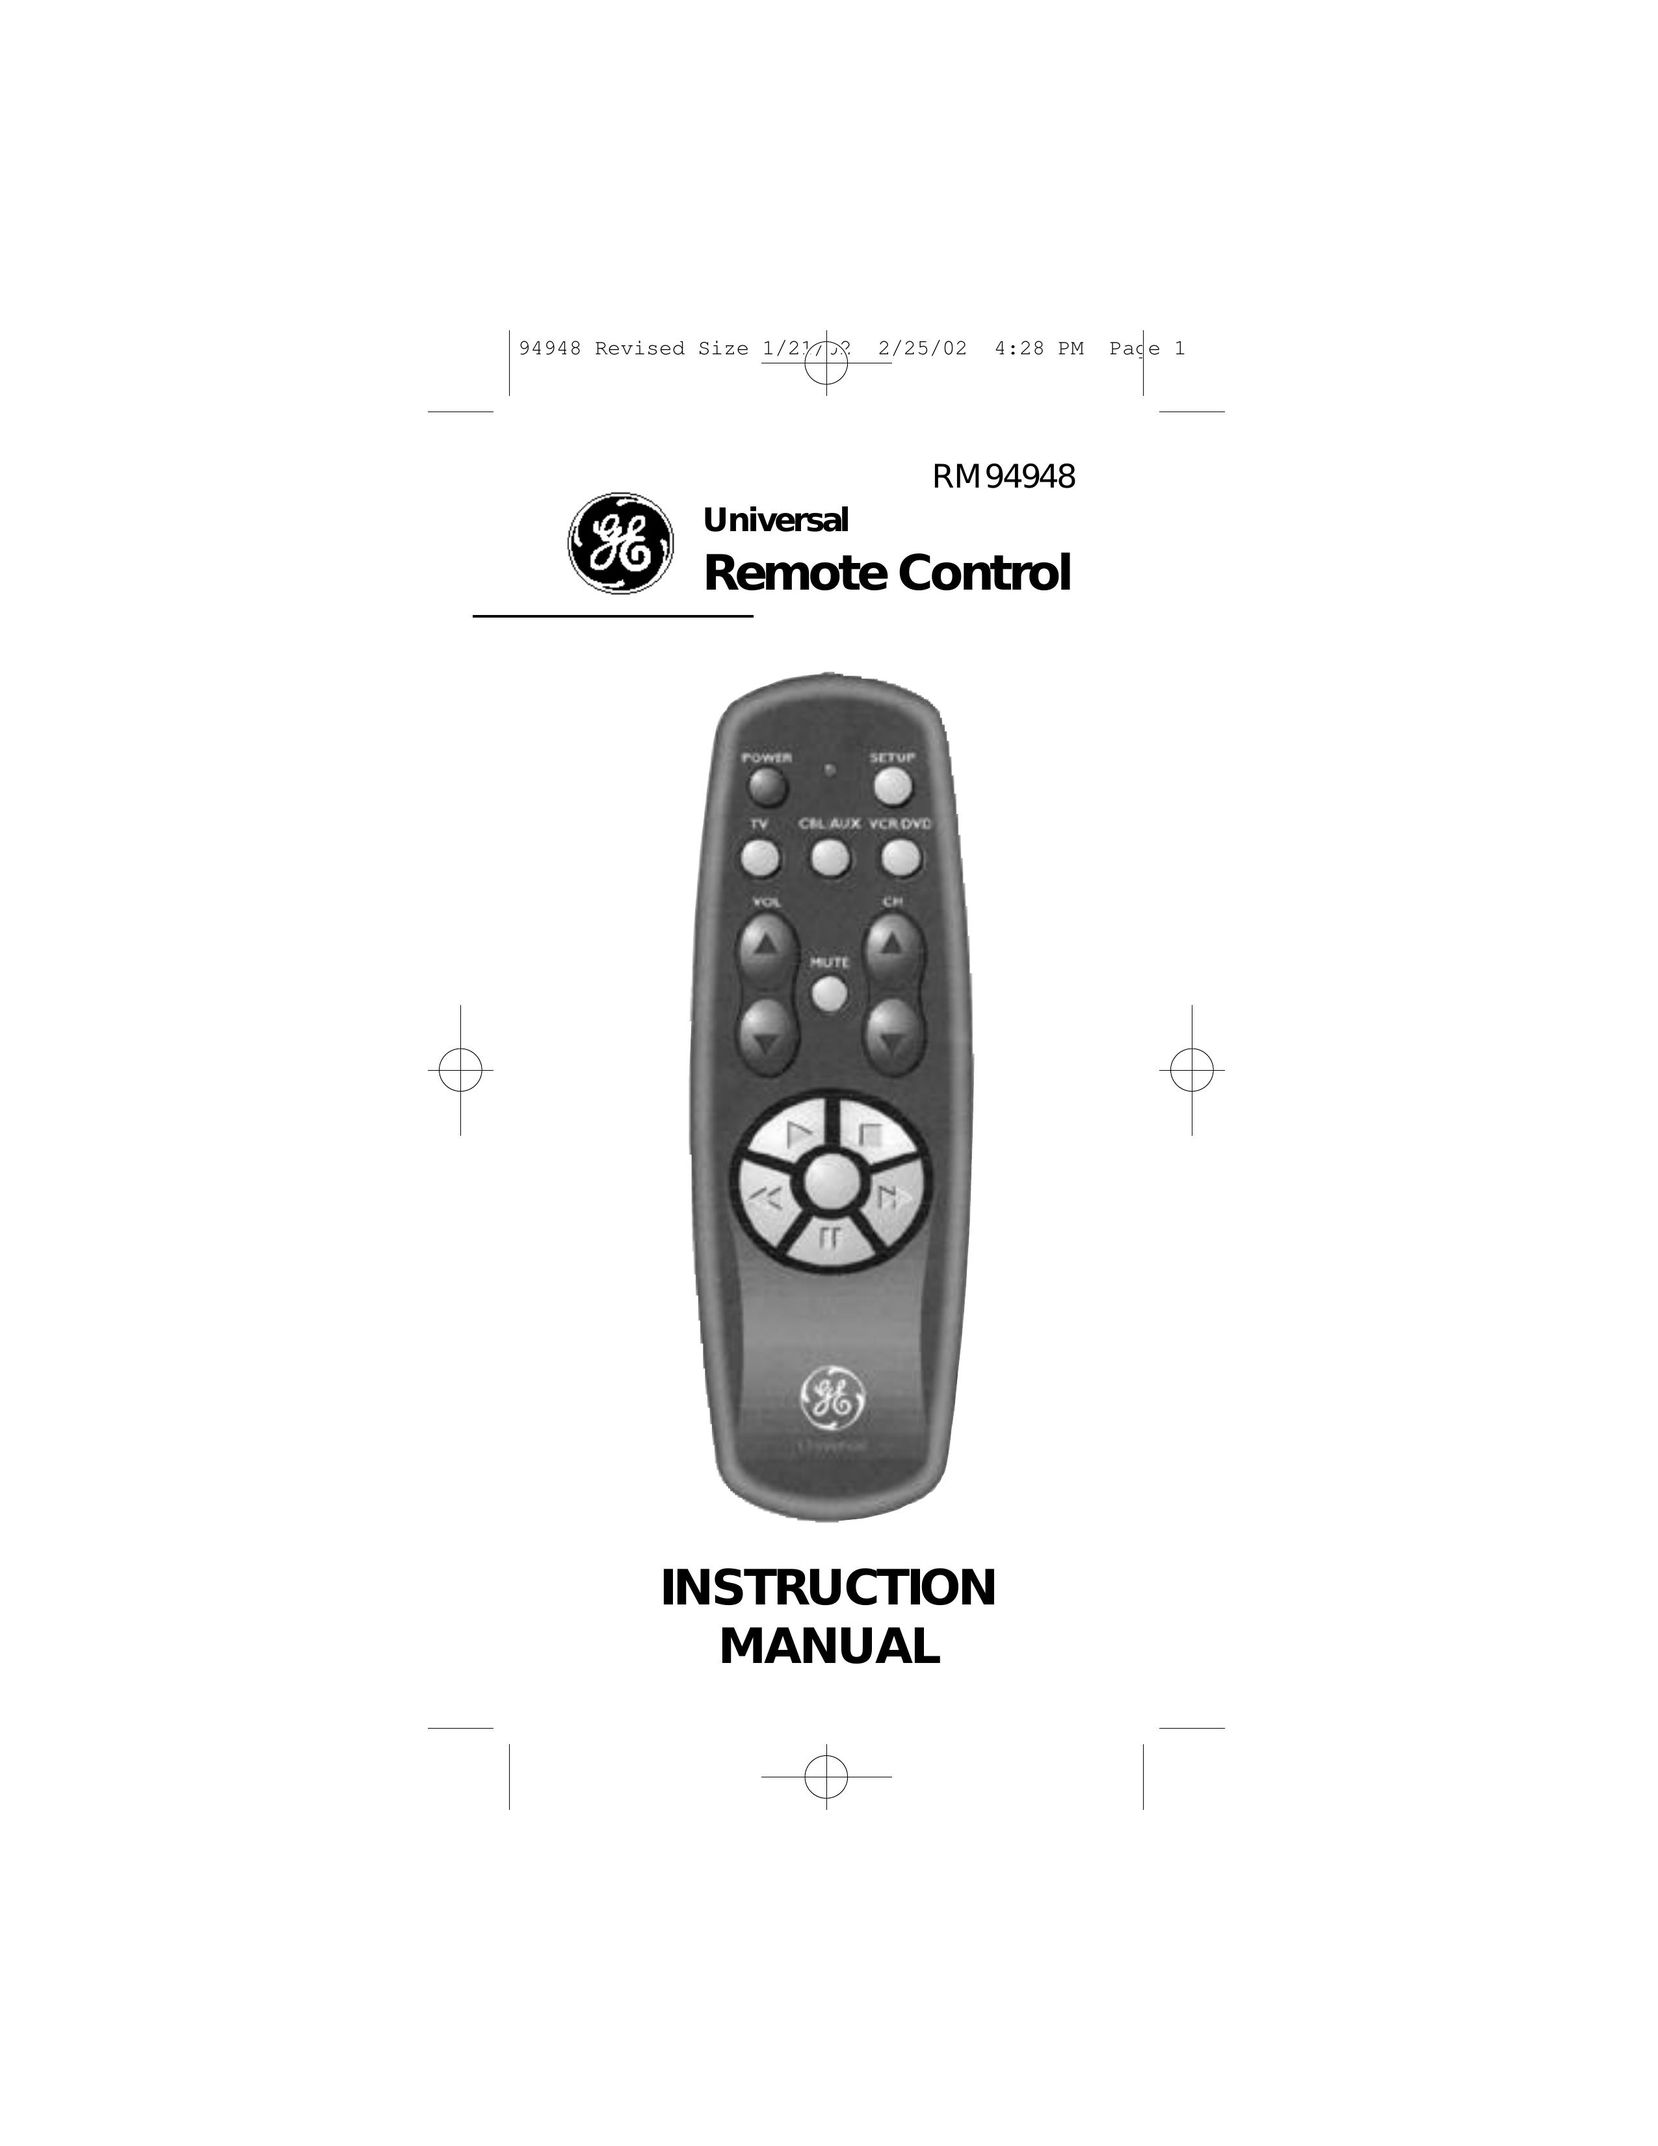 GE RM94948 Universal Remote User Manual